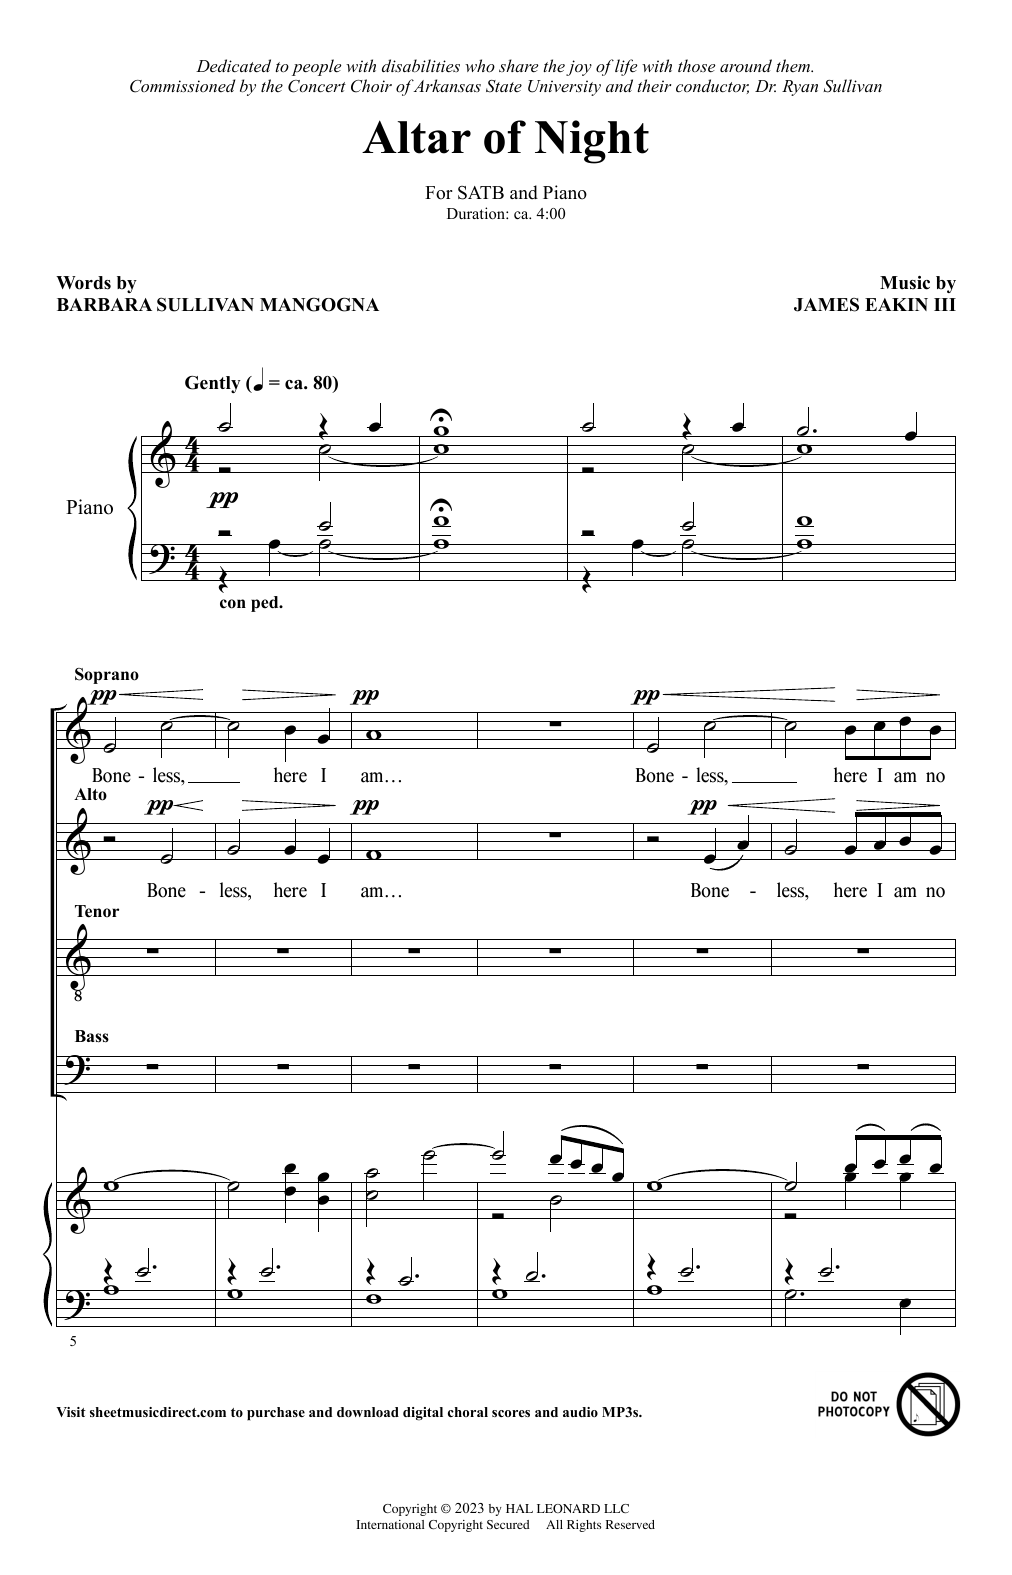 Download James Eakin III Altar Of Night Sheet Music